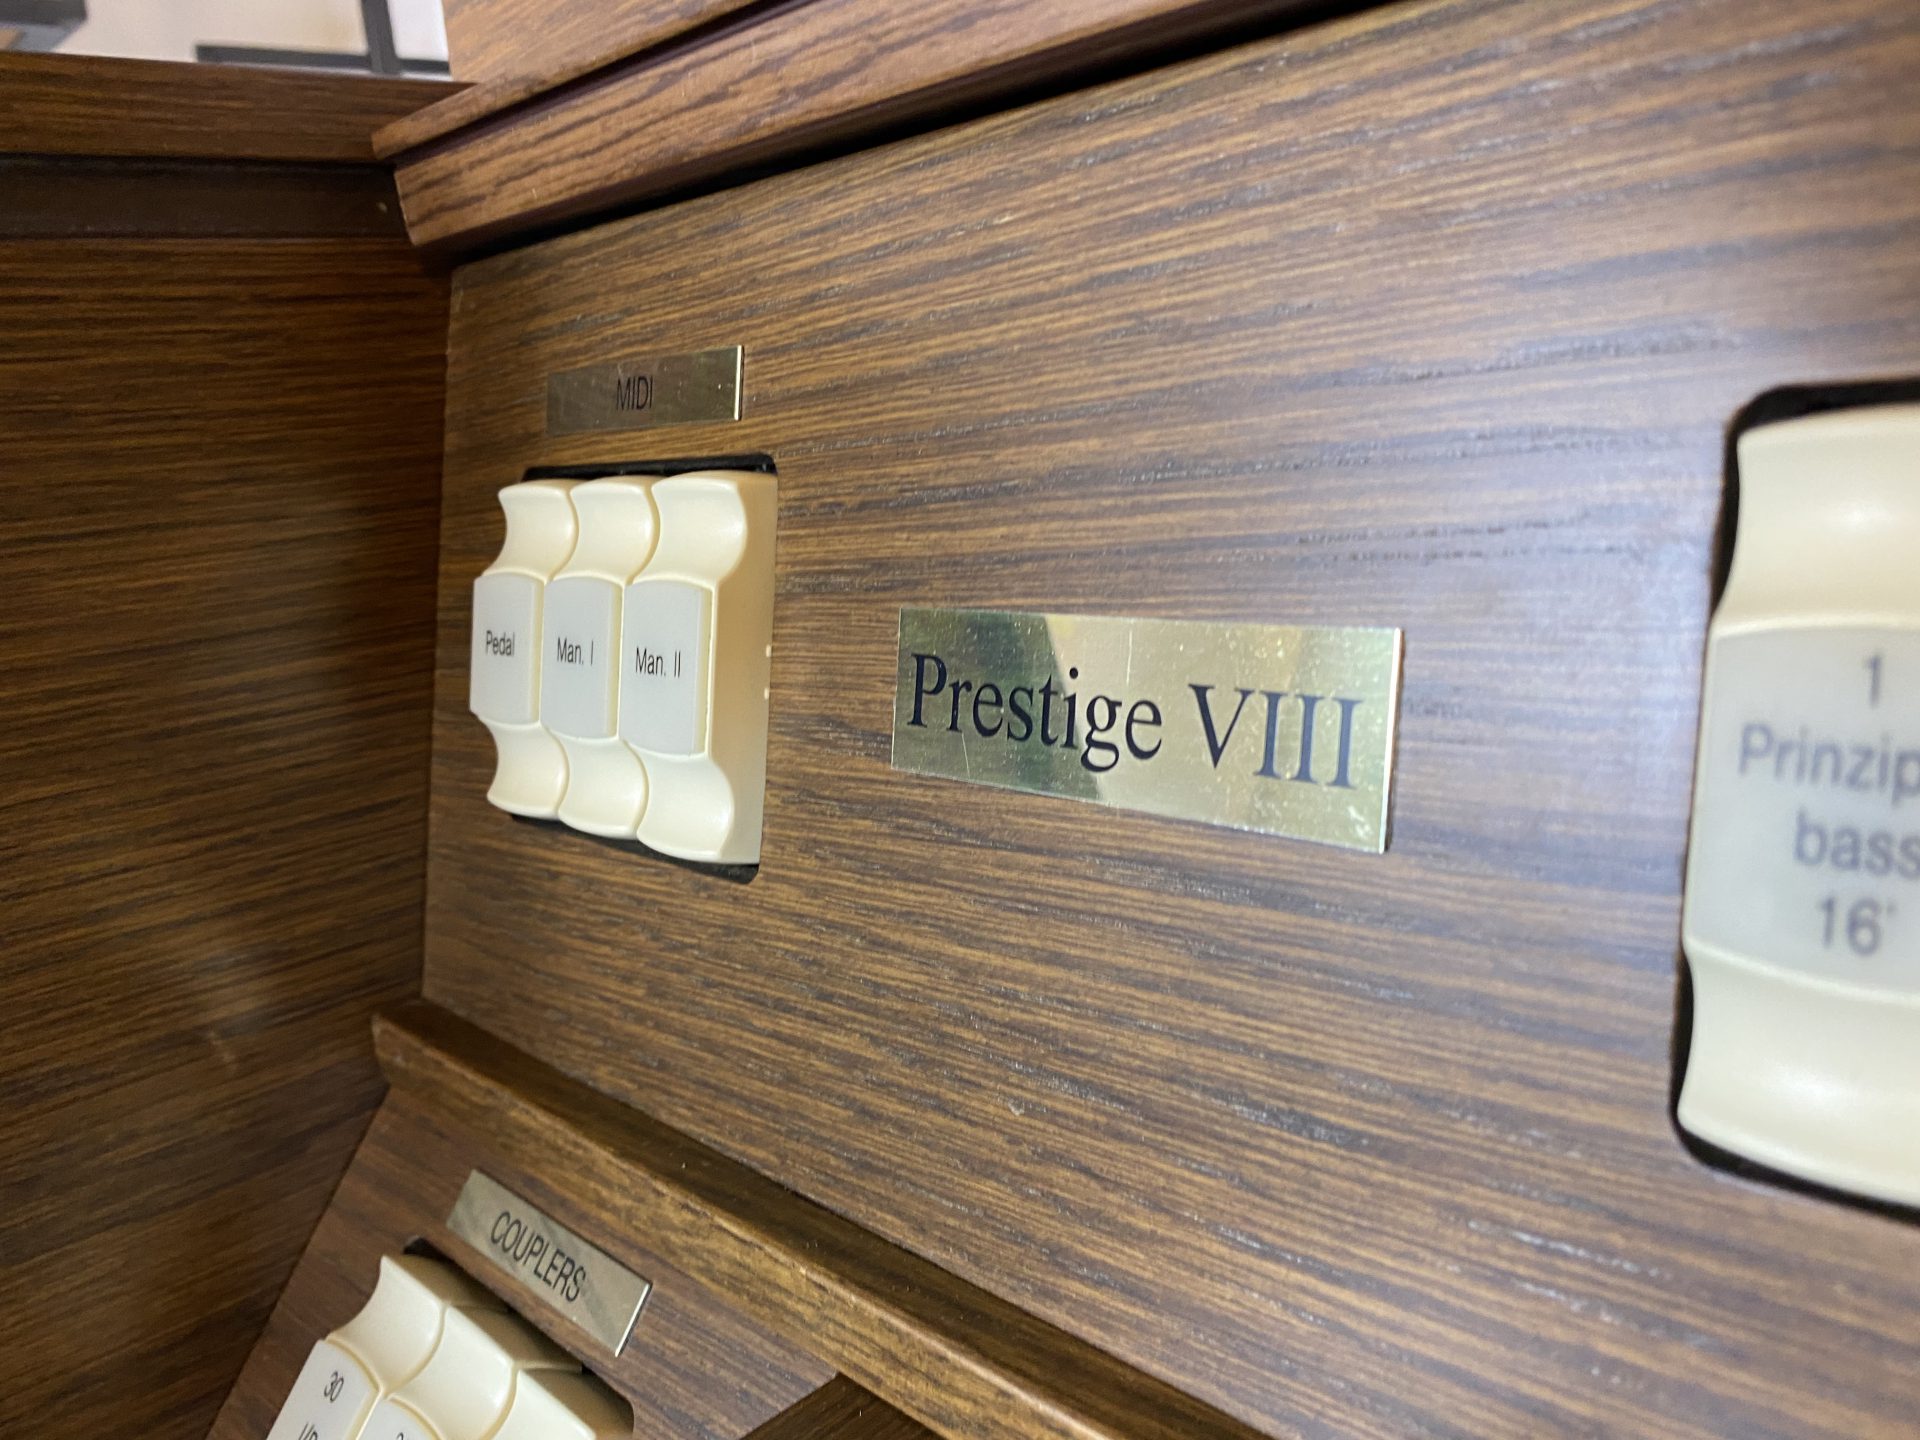 Viscount Prestige VIII